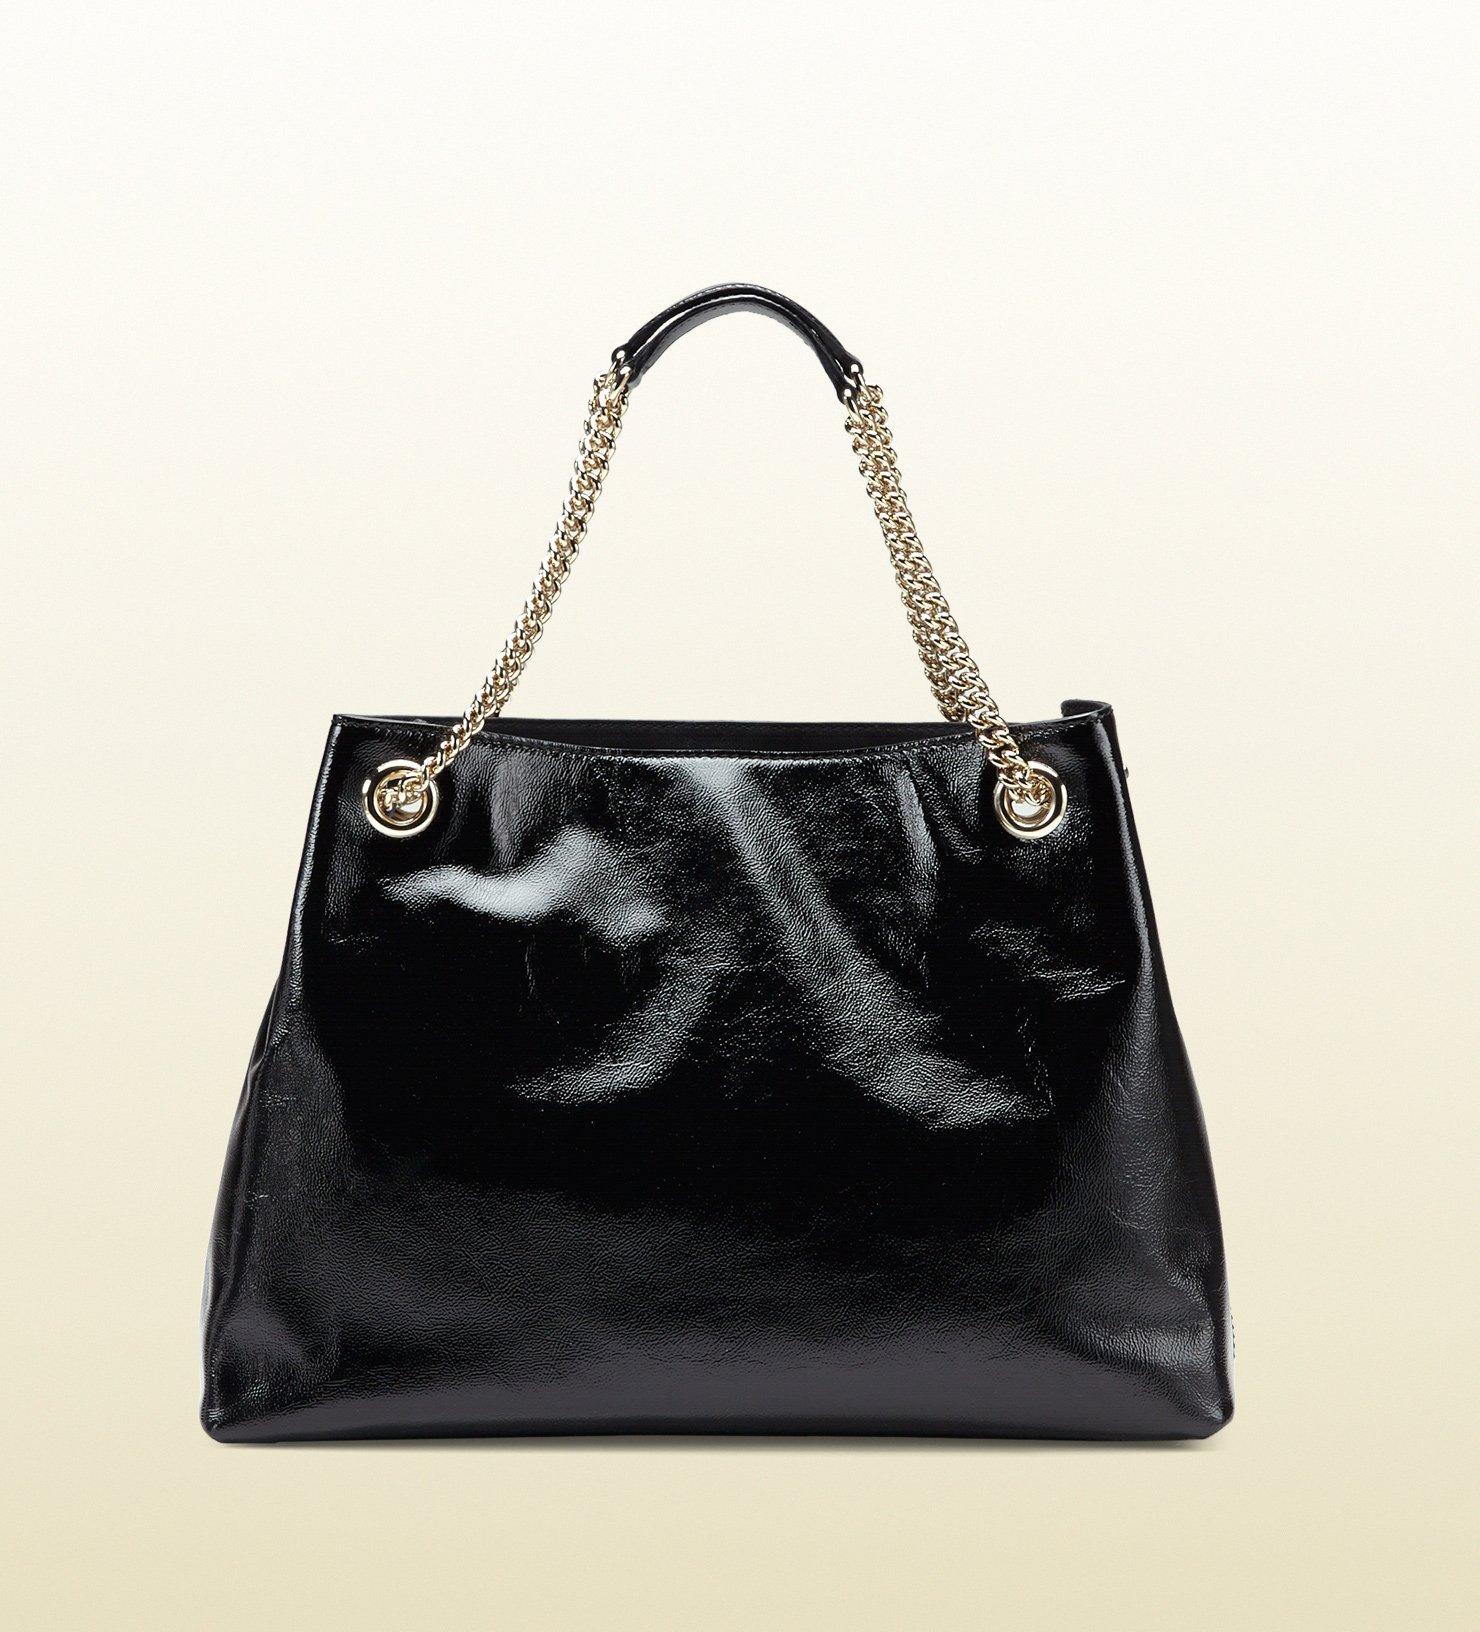 Lyst - Gucci Soho Soft Patent Leather Shoulder Bag in Black